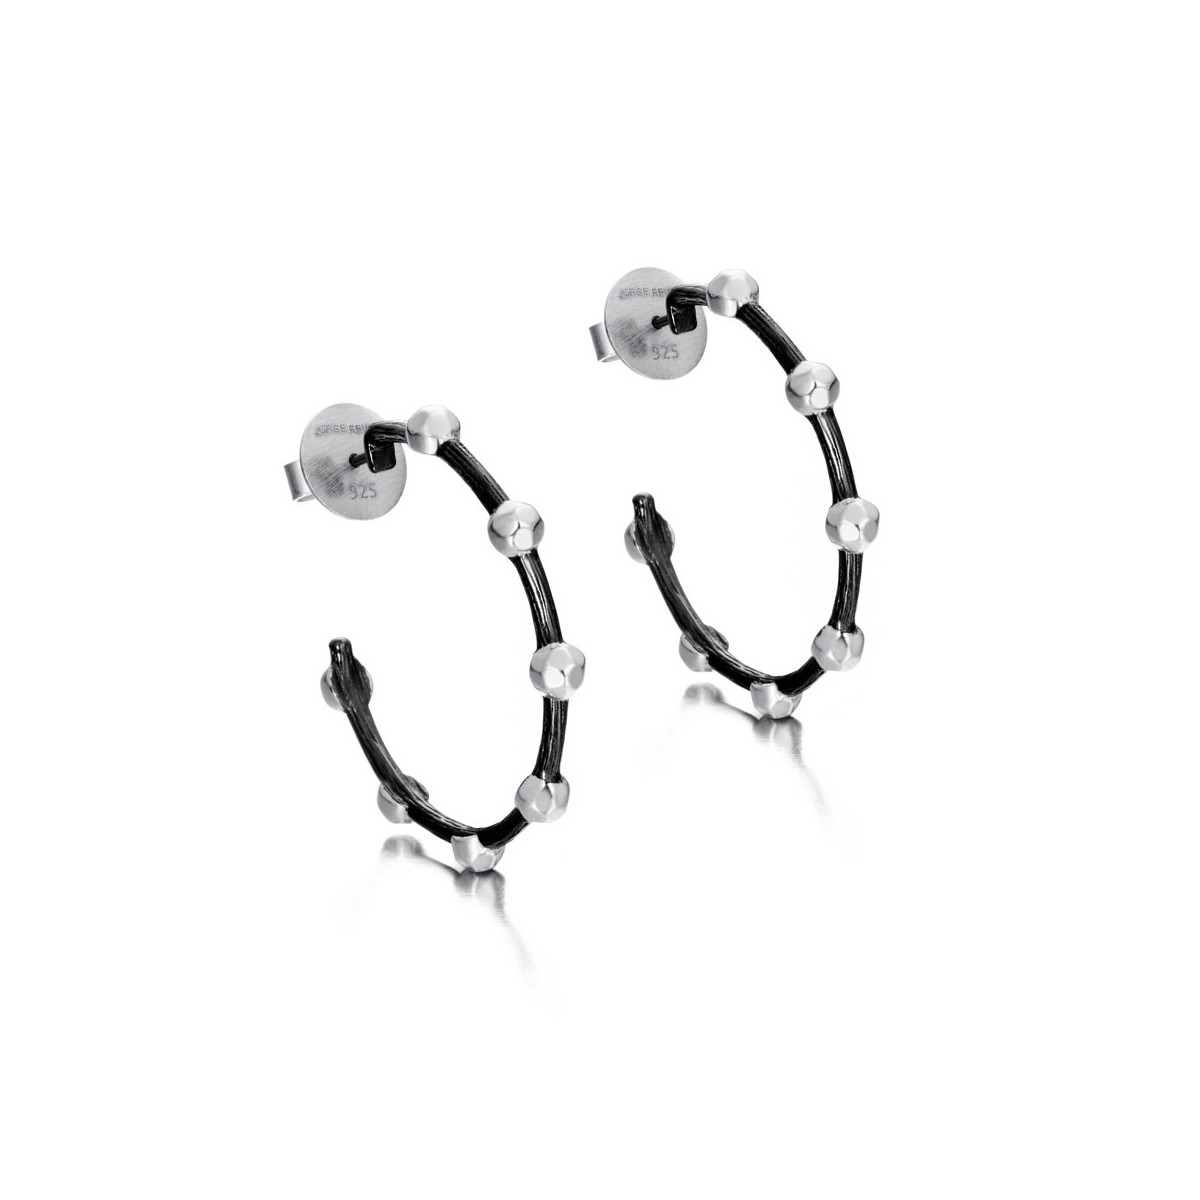 CELESTIAL Earrings in Silver and Black Ruthenium